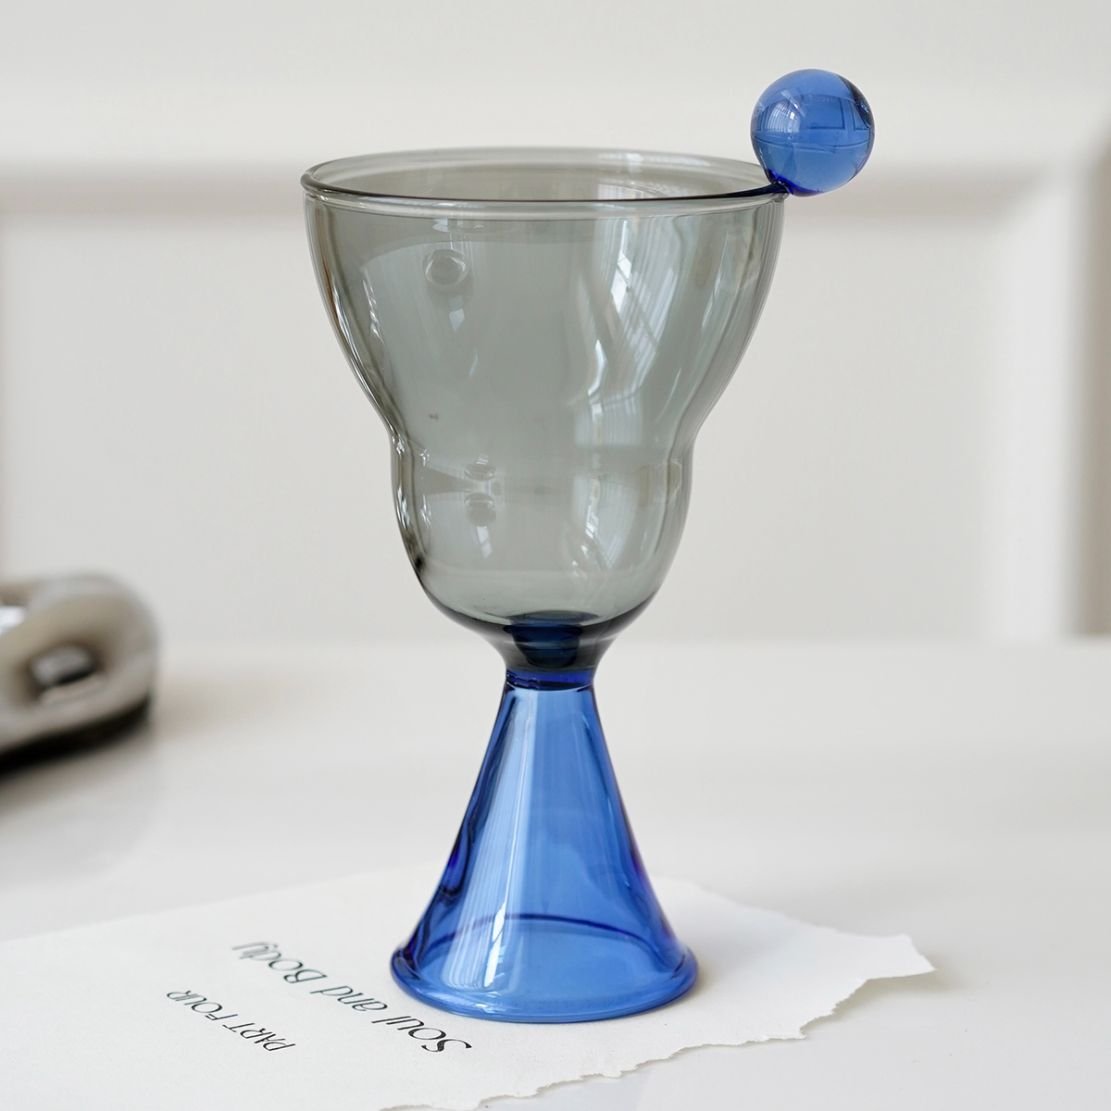 Grey & blue glass trumpet shape drinkware